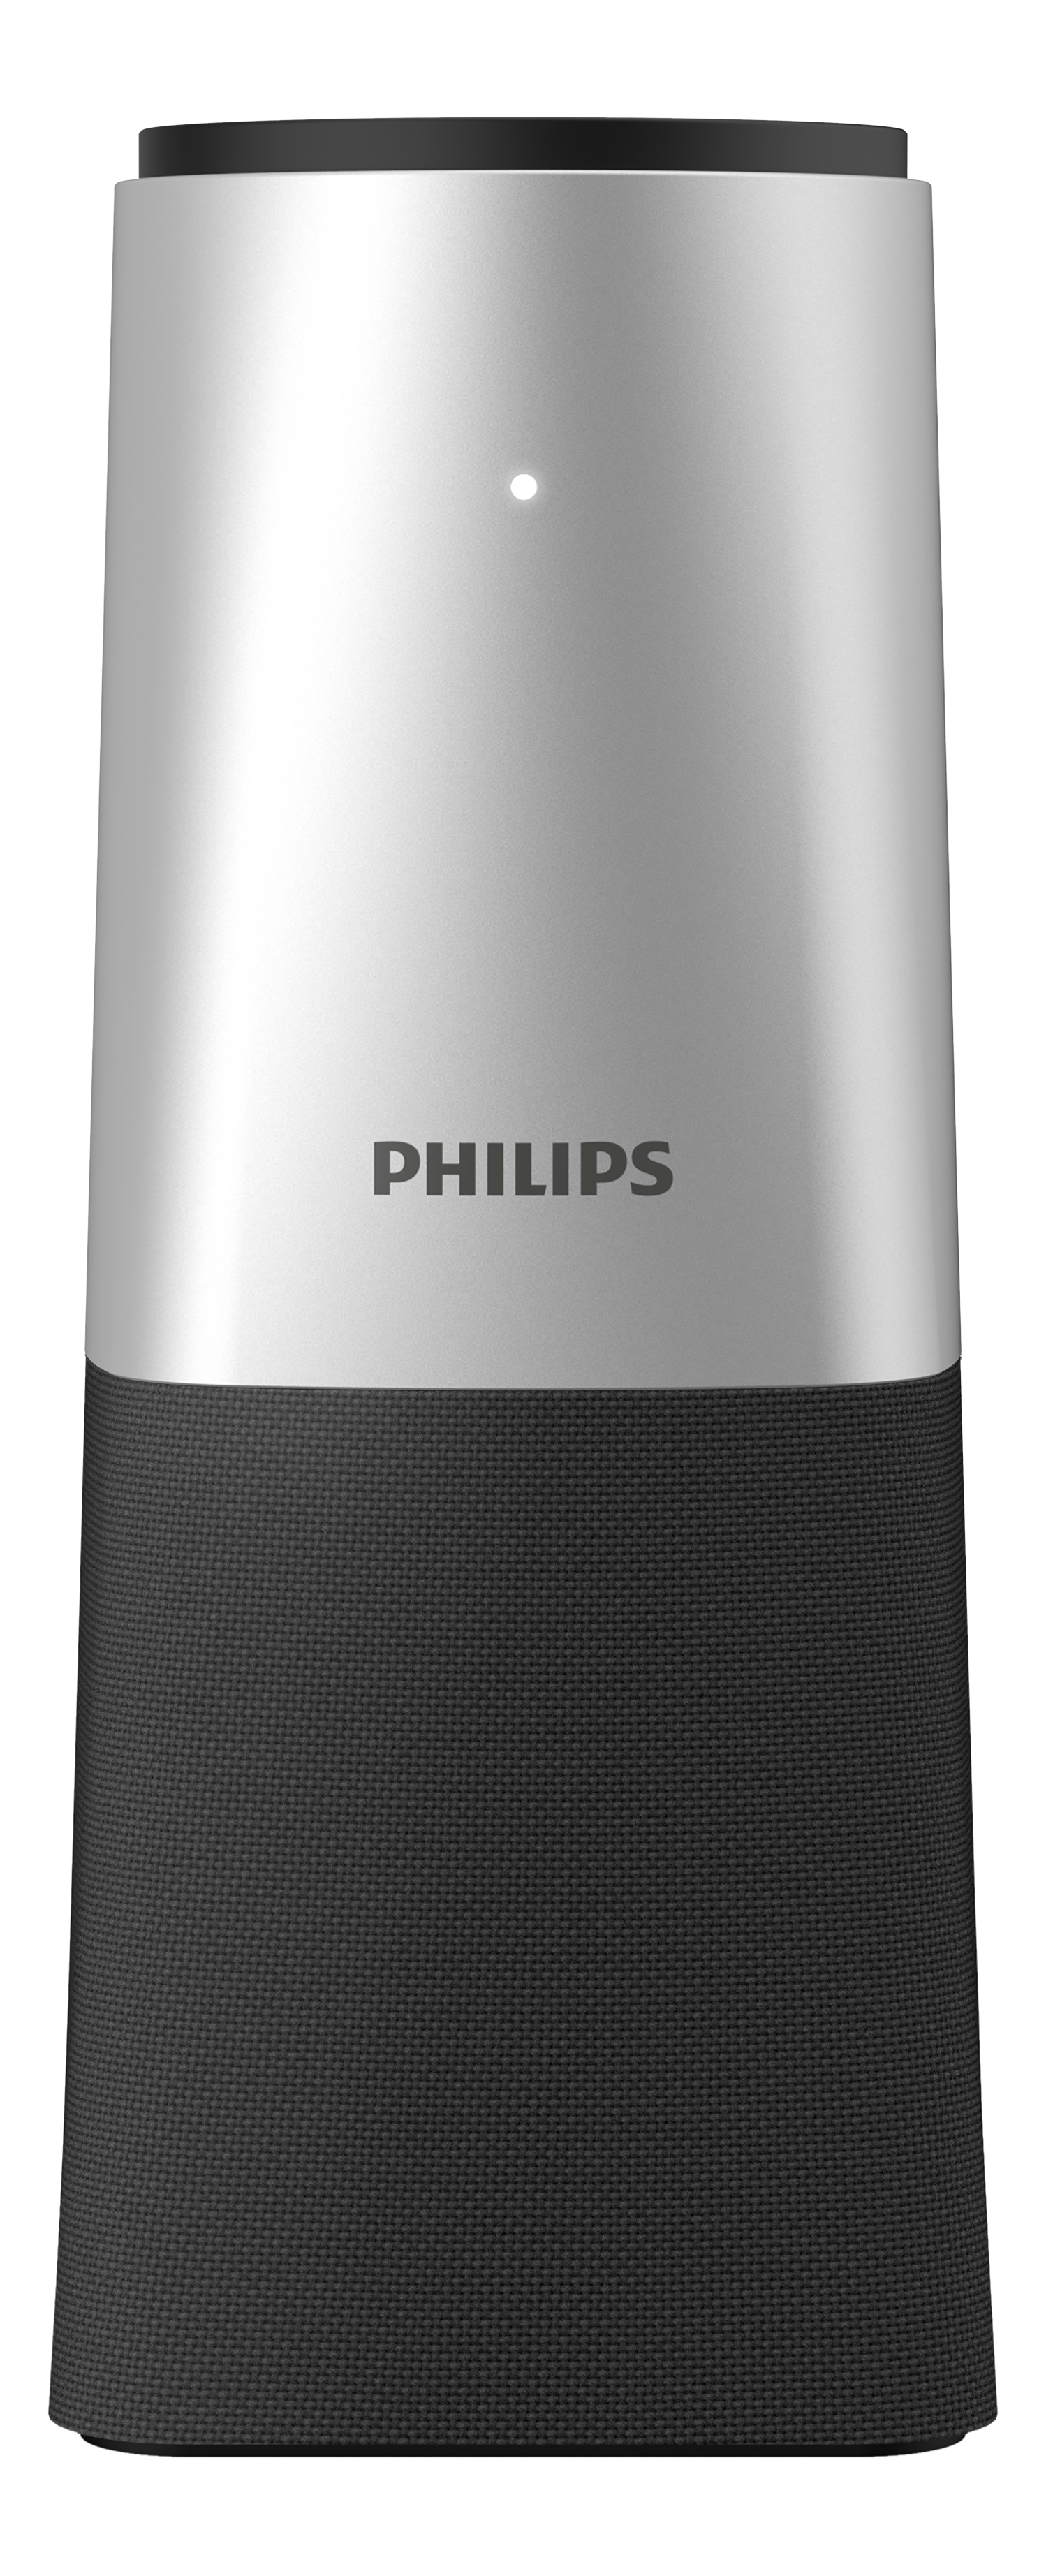 PHILIPS Smart Meeting PSE0540/00 - Tragbares Konferenzmikrofon (Dunkelgrau/Silber)